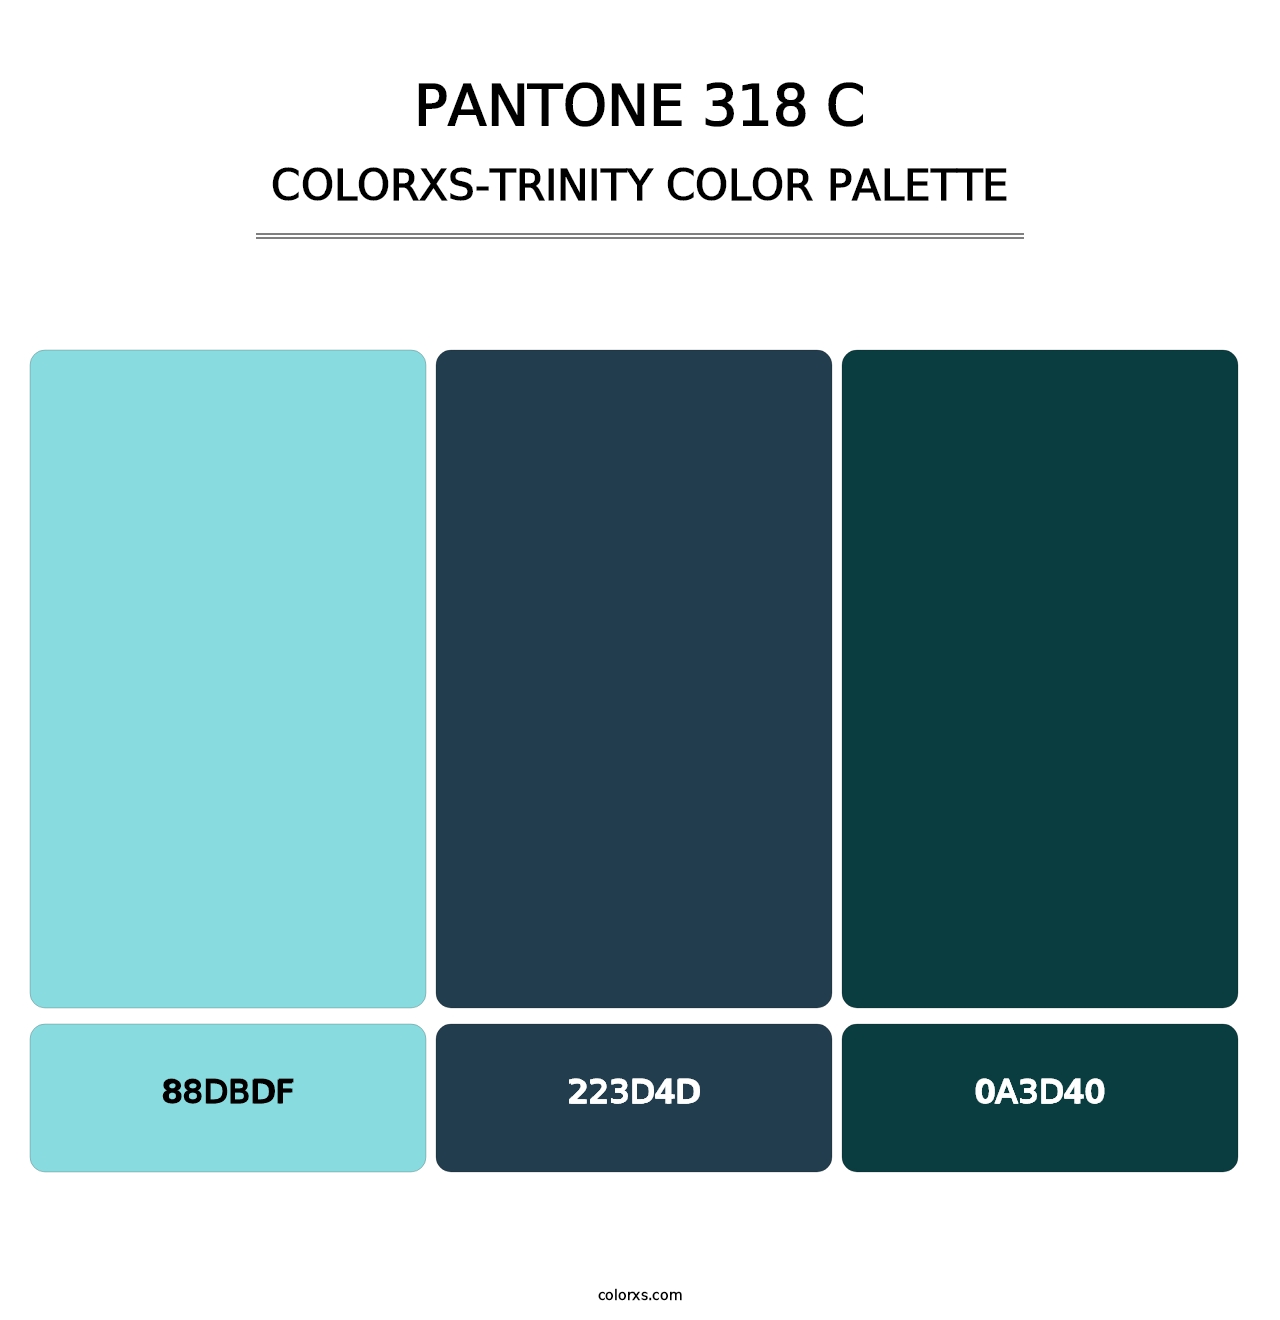 PANTONE 318 C - Colorxs Trinity Palette